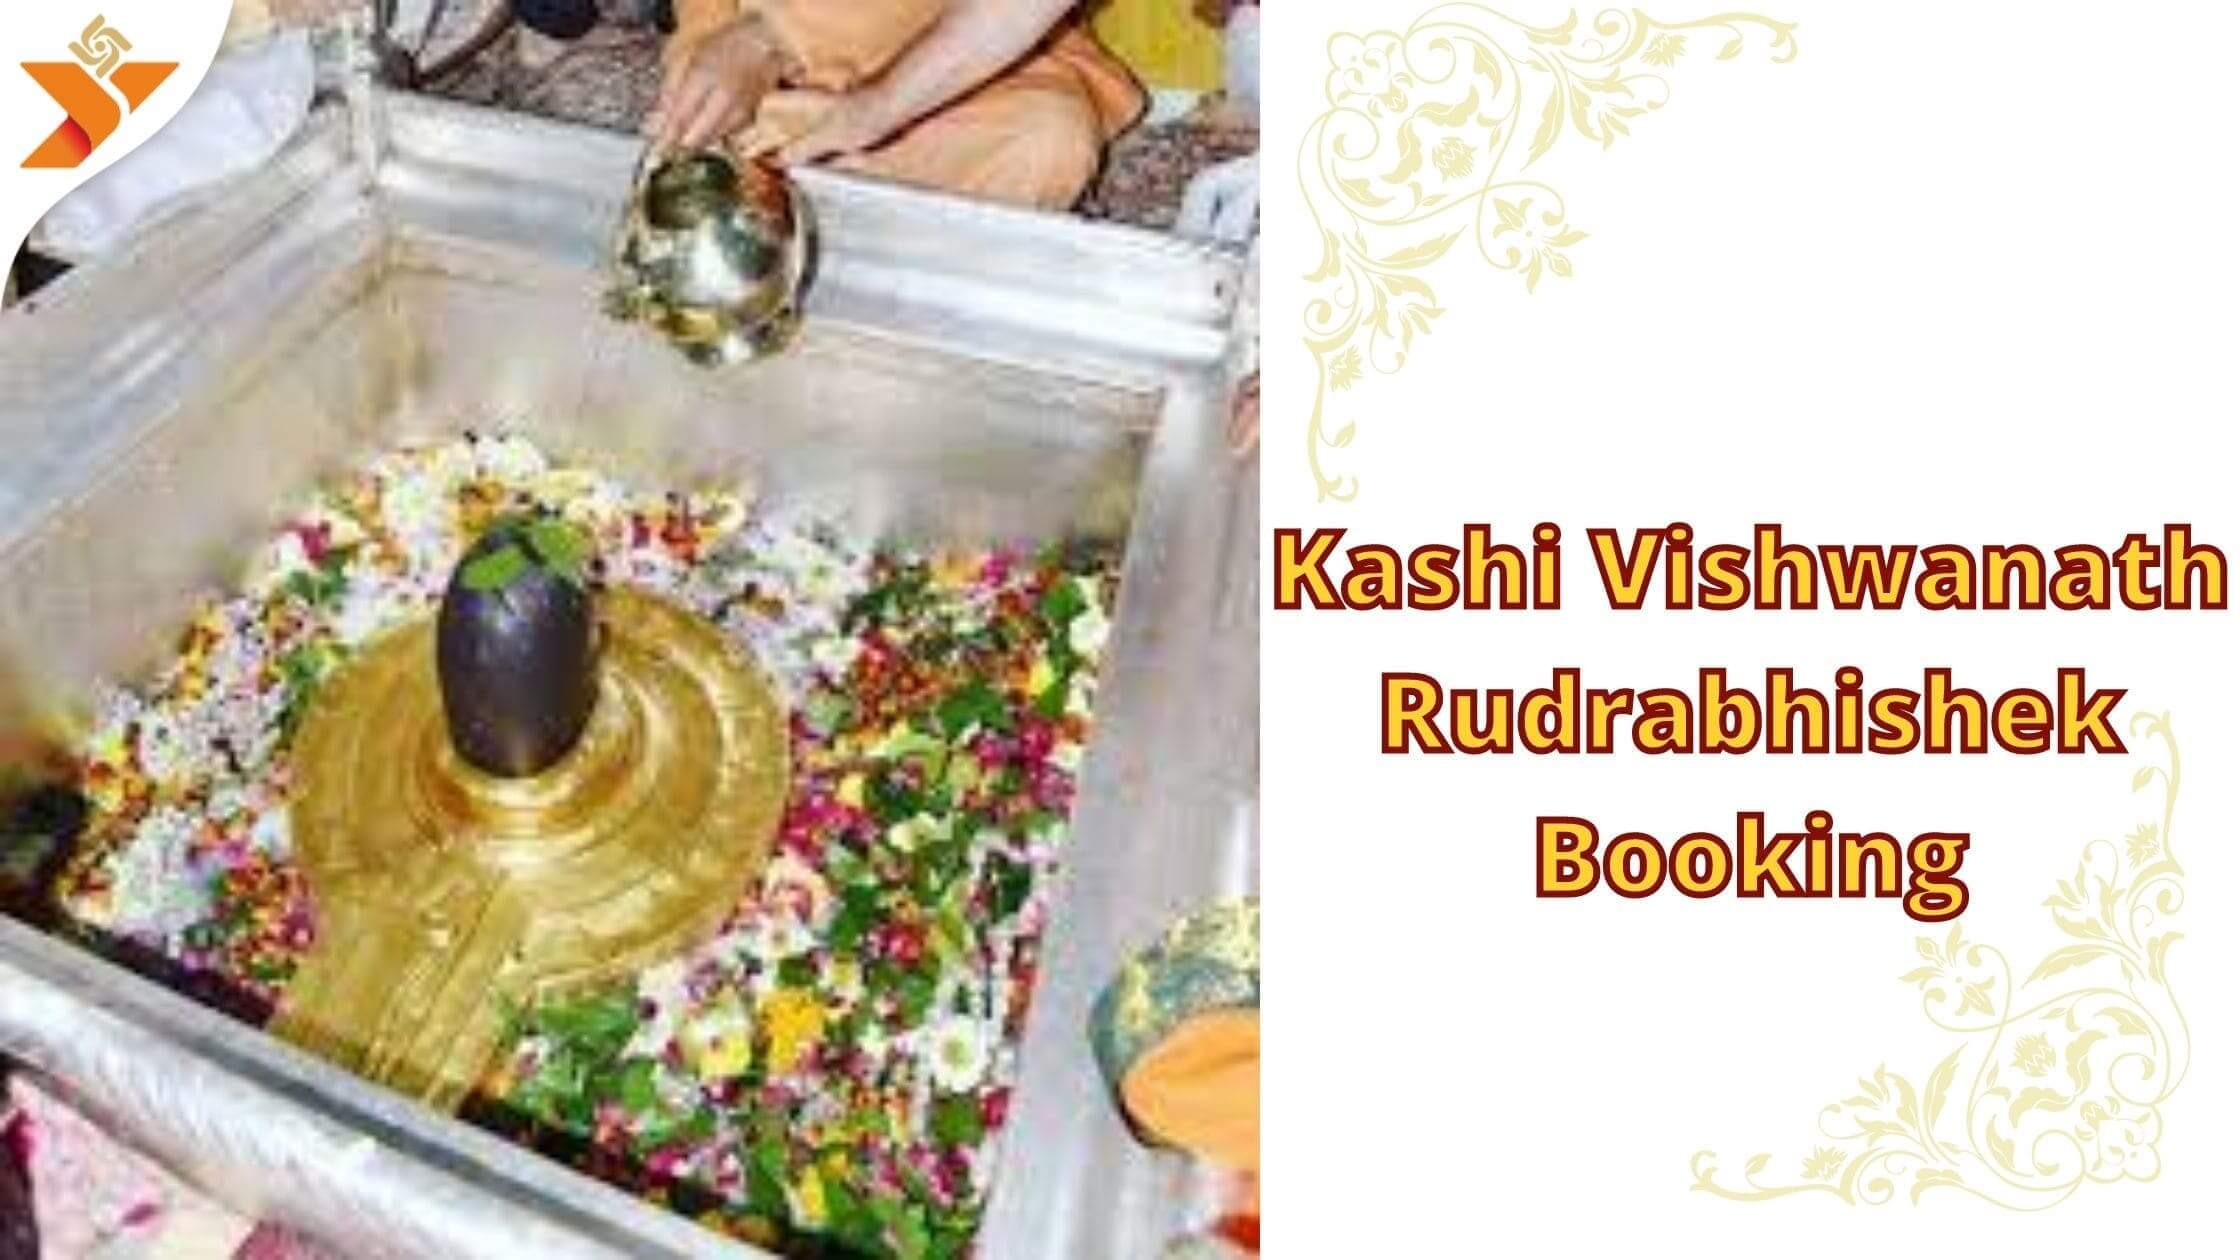 kashi vishwanath rudrabhishek booking